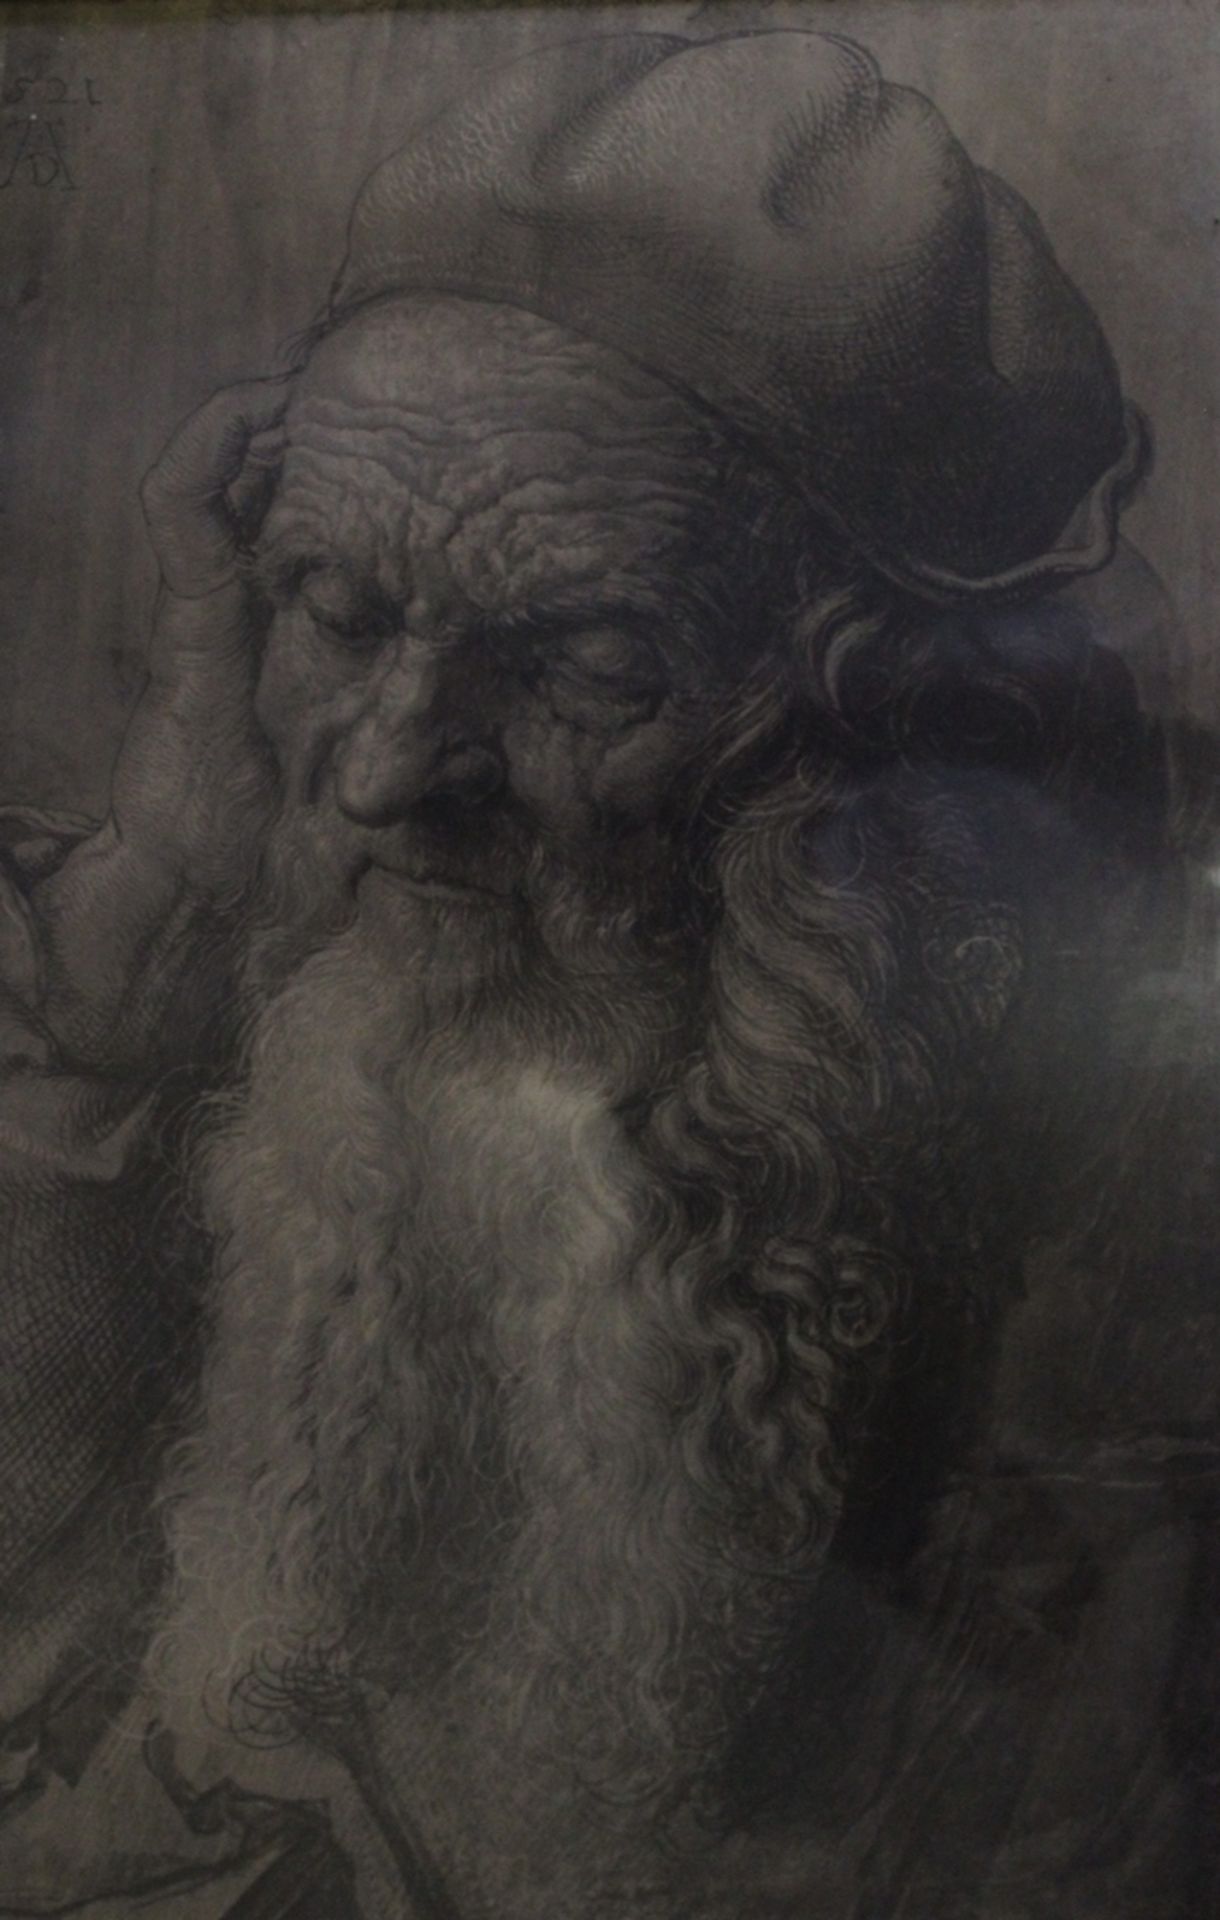 Kunstdruck nach Dürer, um 1920, ger./Glas, RG 54 x 40cm.